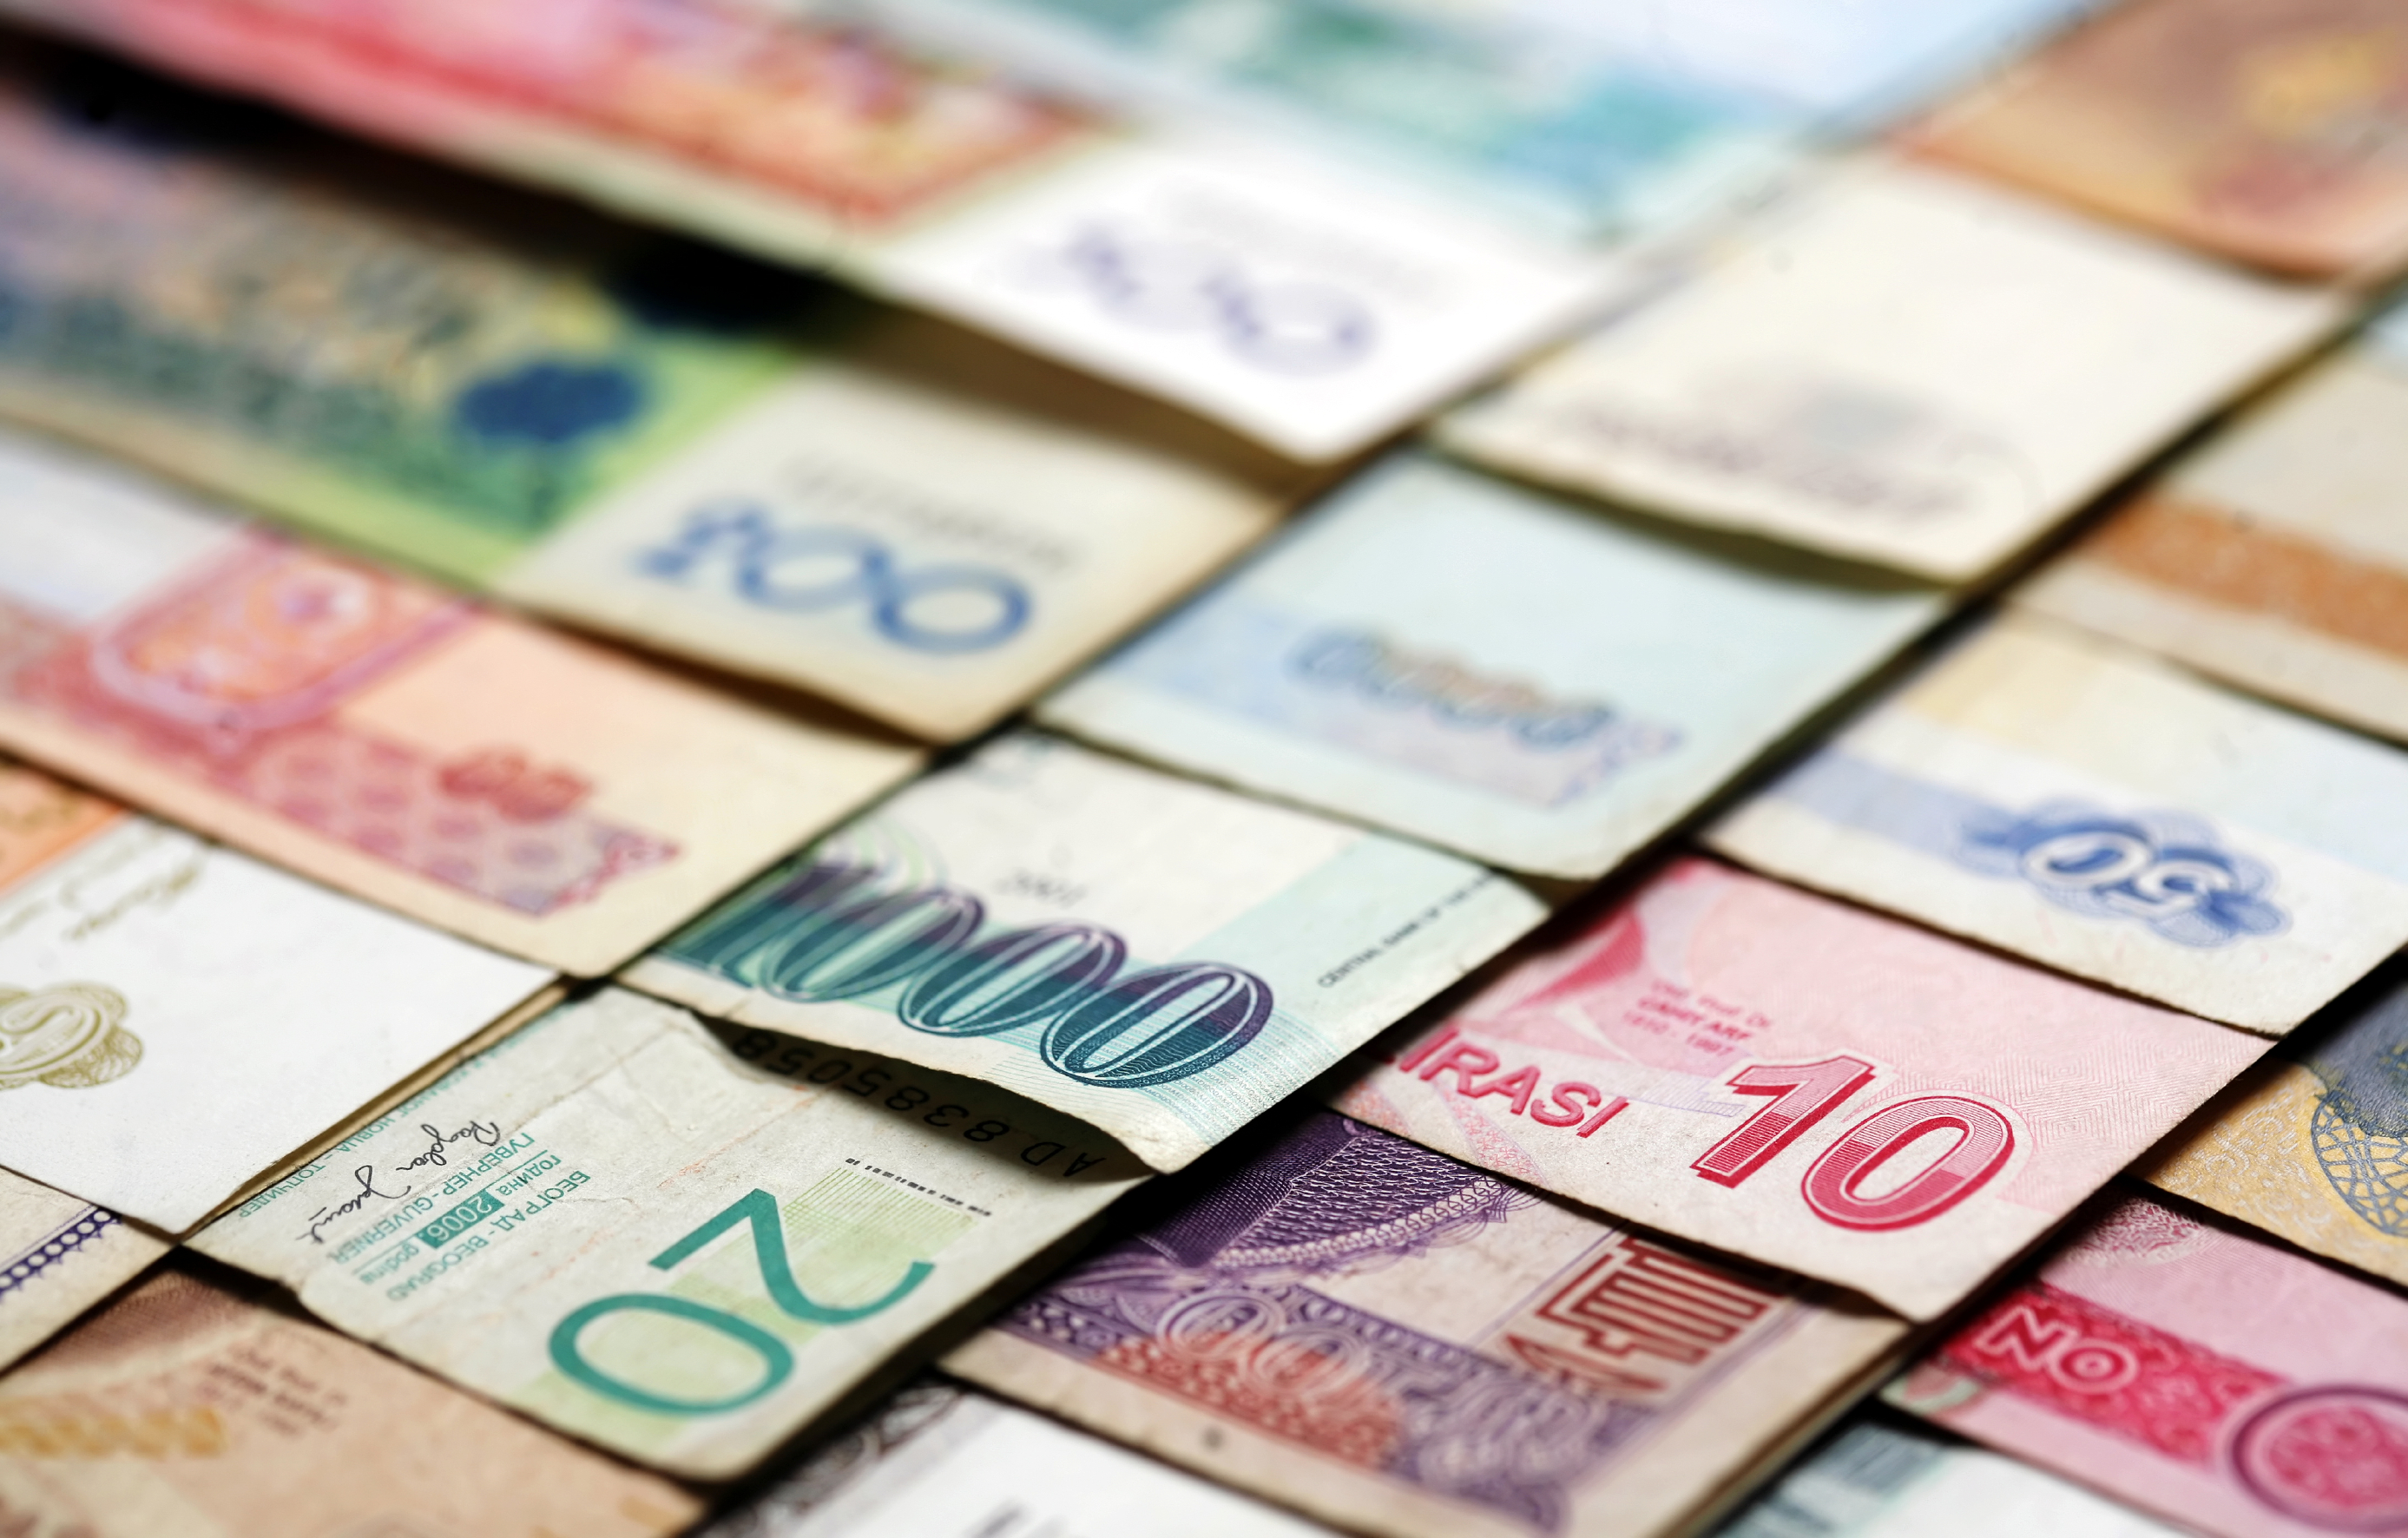 financialounge -  Credit Suisse Fondi obbligazionari High Yield mercati emergenti mercati obbligazionari mercati valutari Nannette Hechler-Fayd'herbe valuta locale